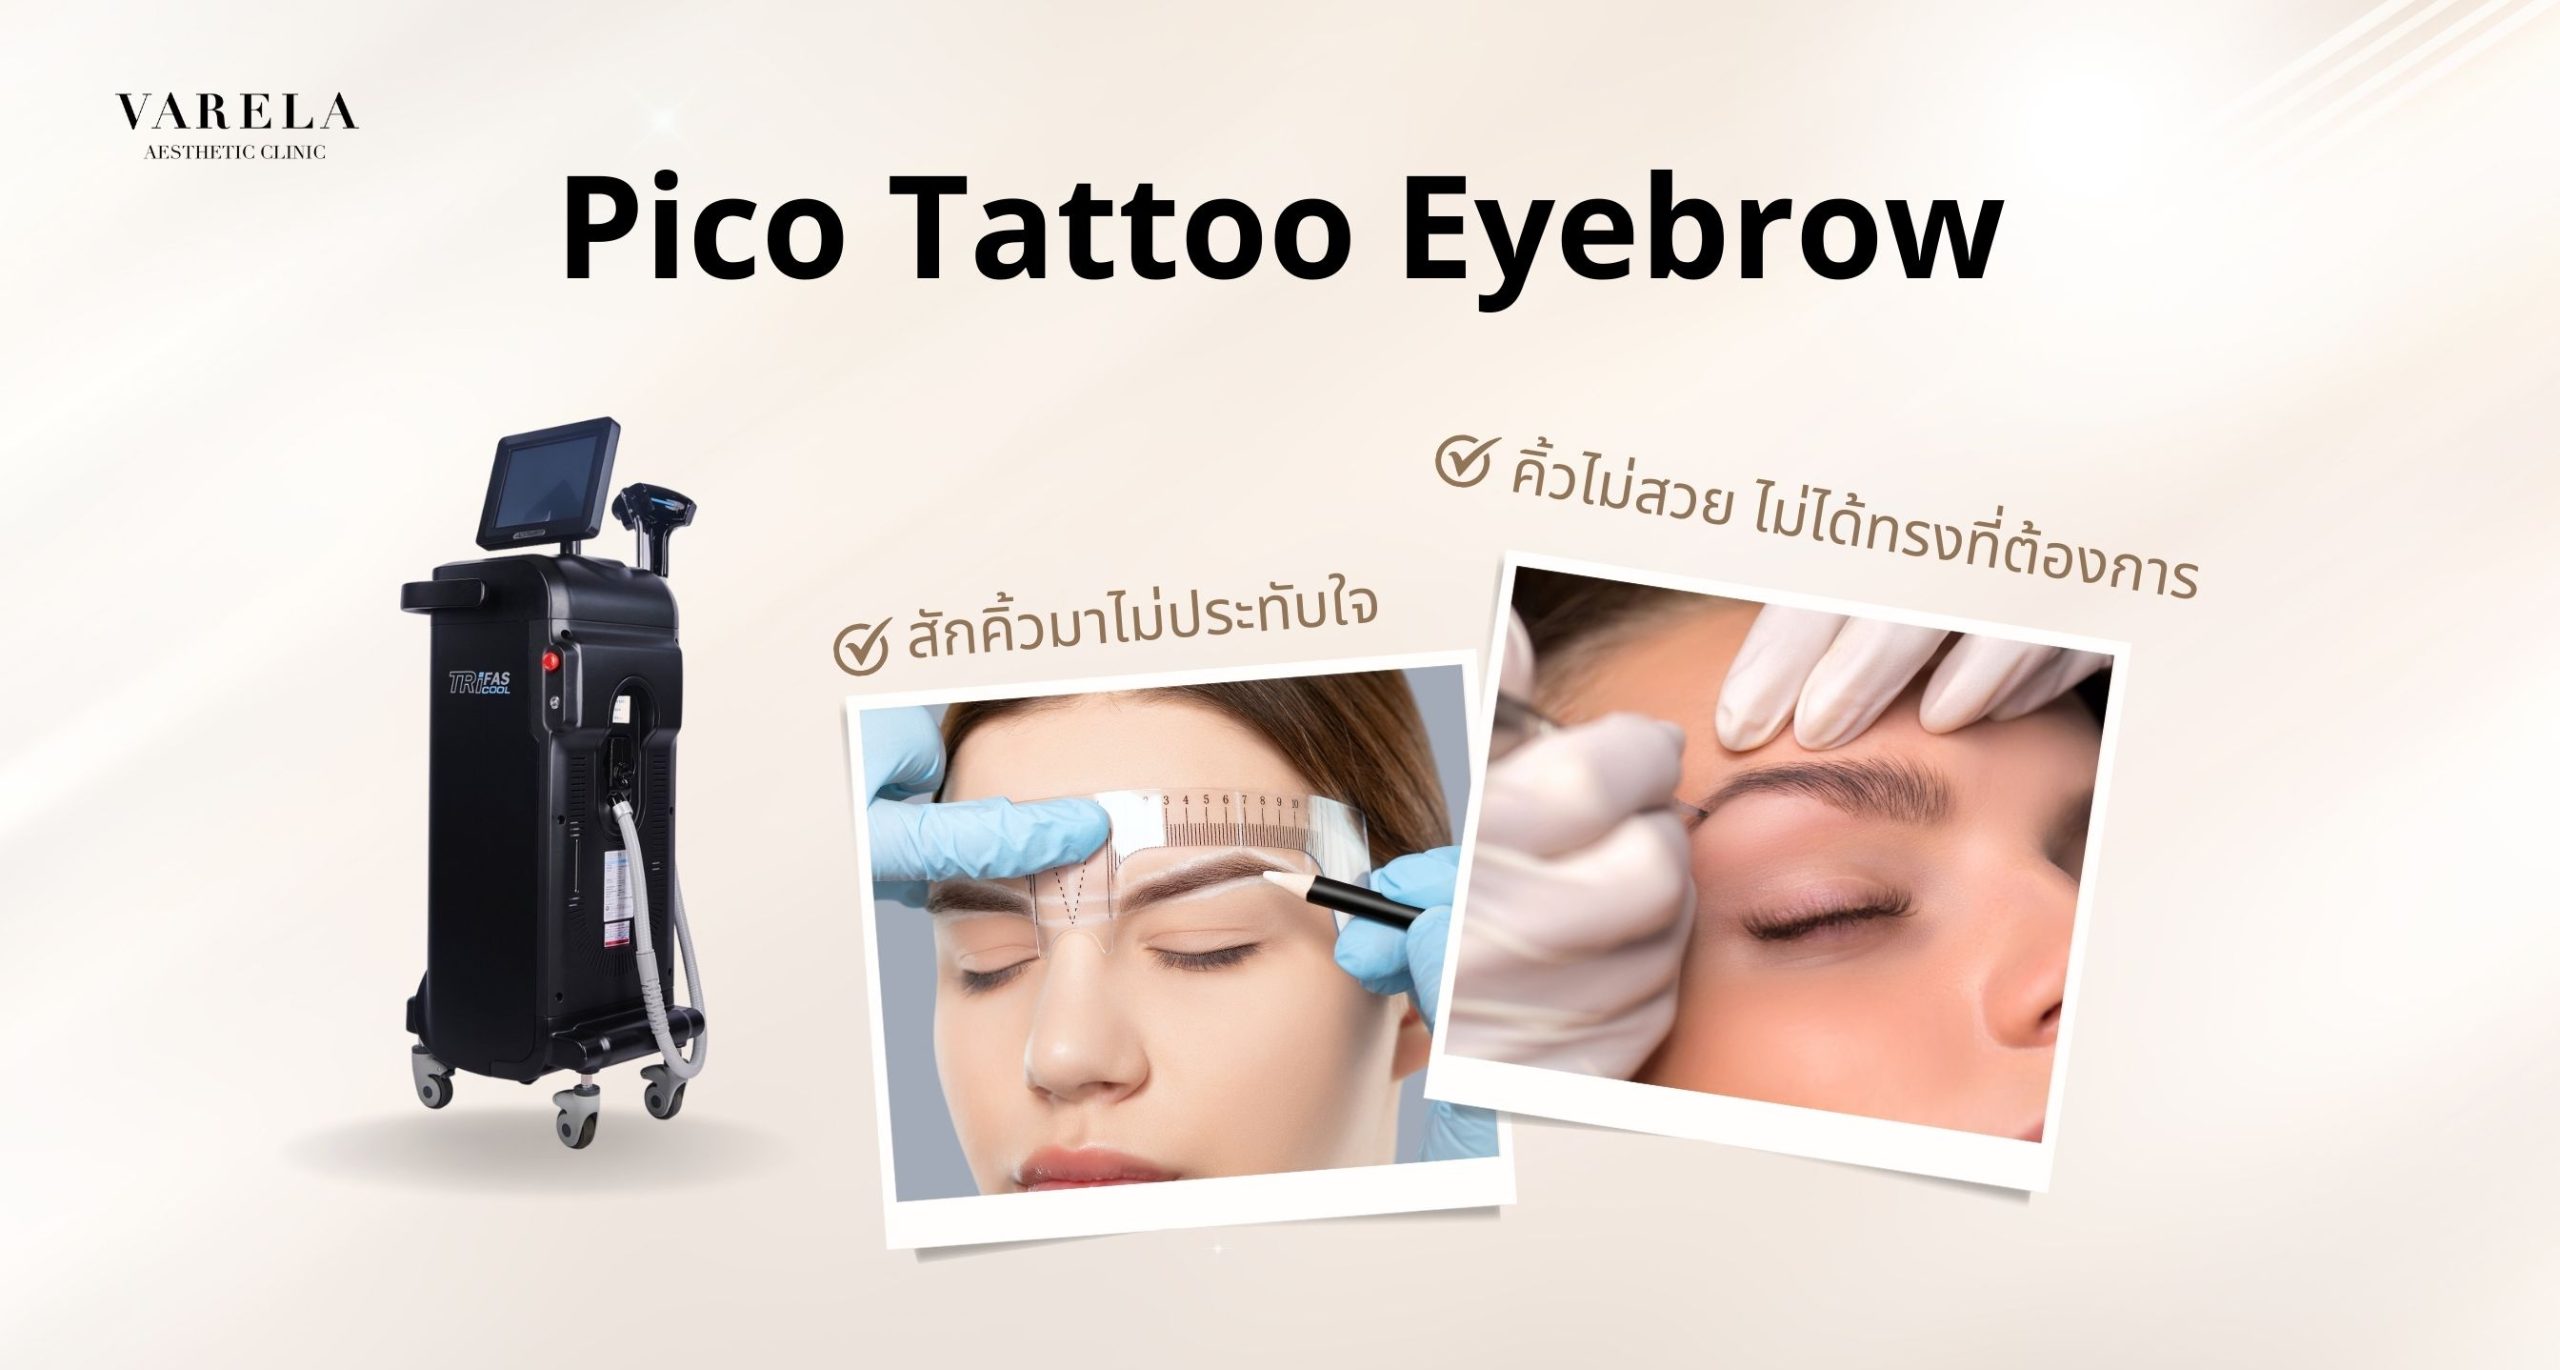 Pico tattoo Eyebrow